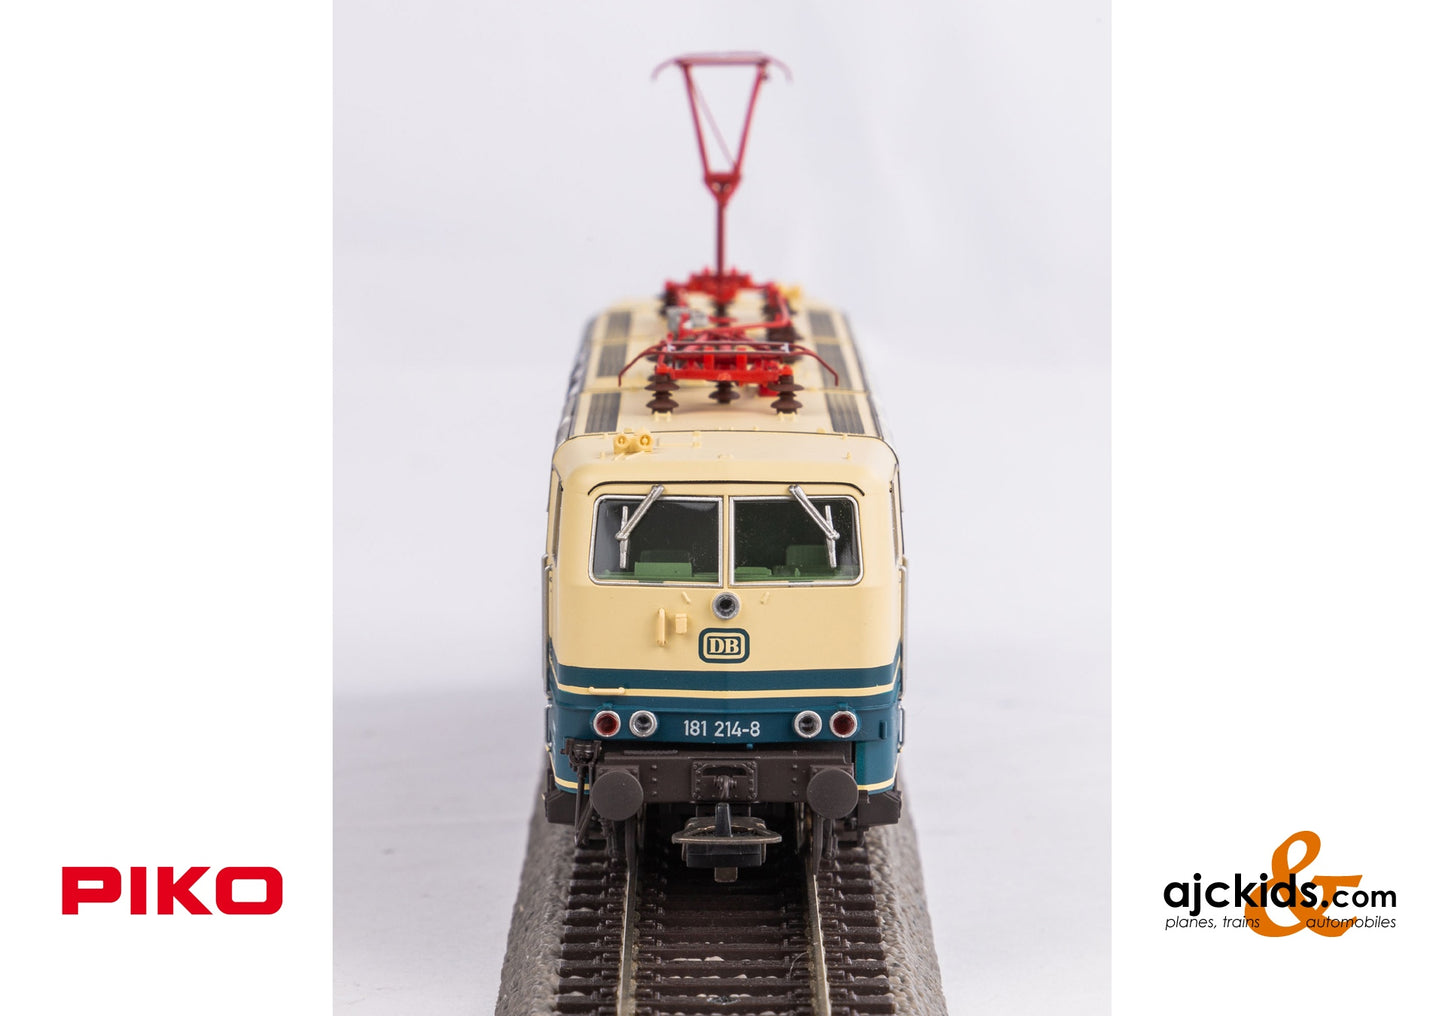 Piko 51357 - BR 181.2 Electric Locomotive DB "Mosel" IV Sound